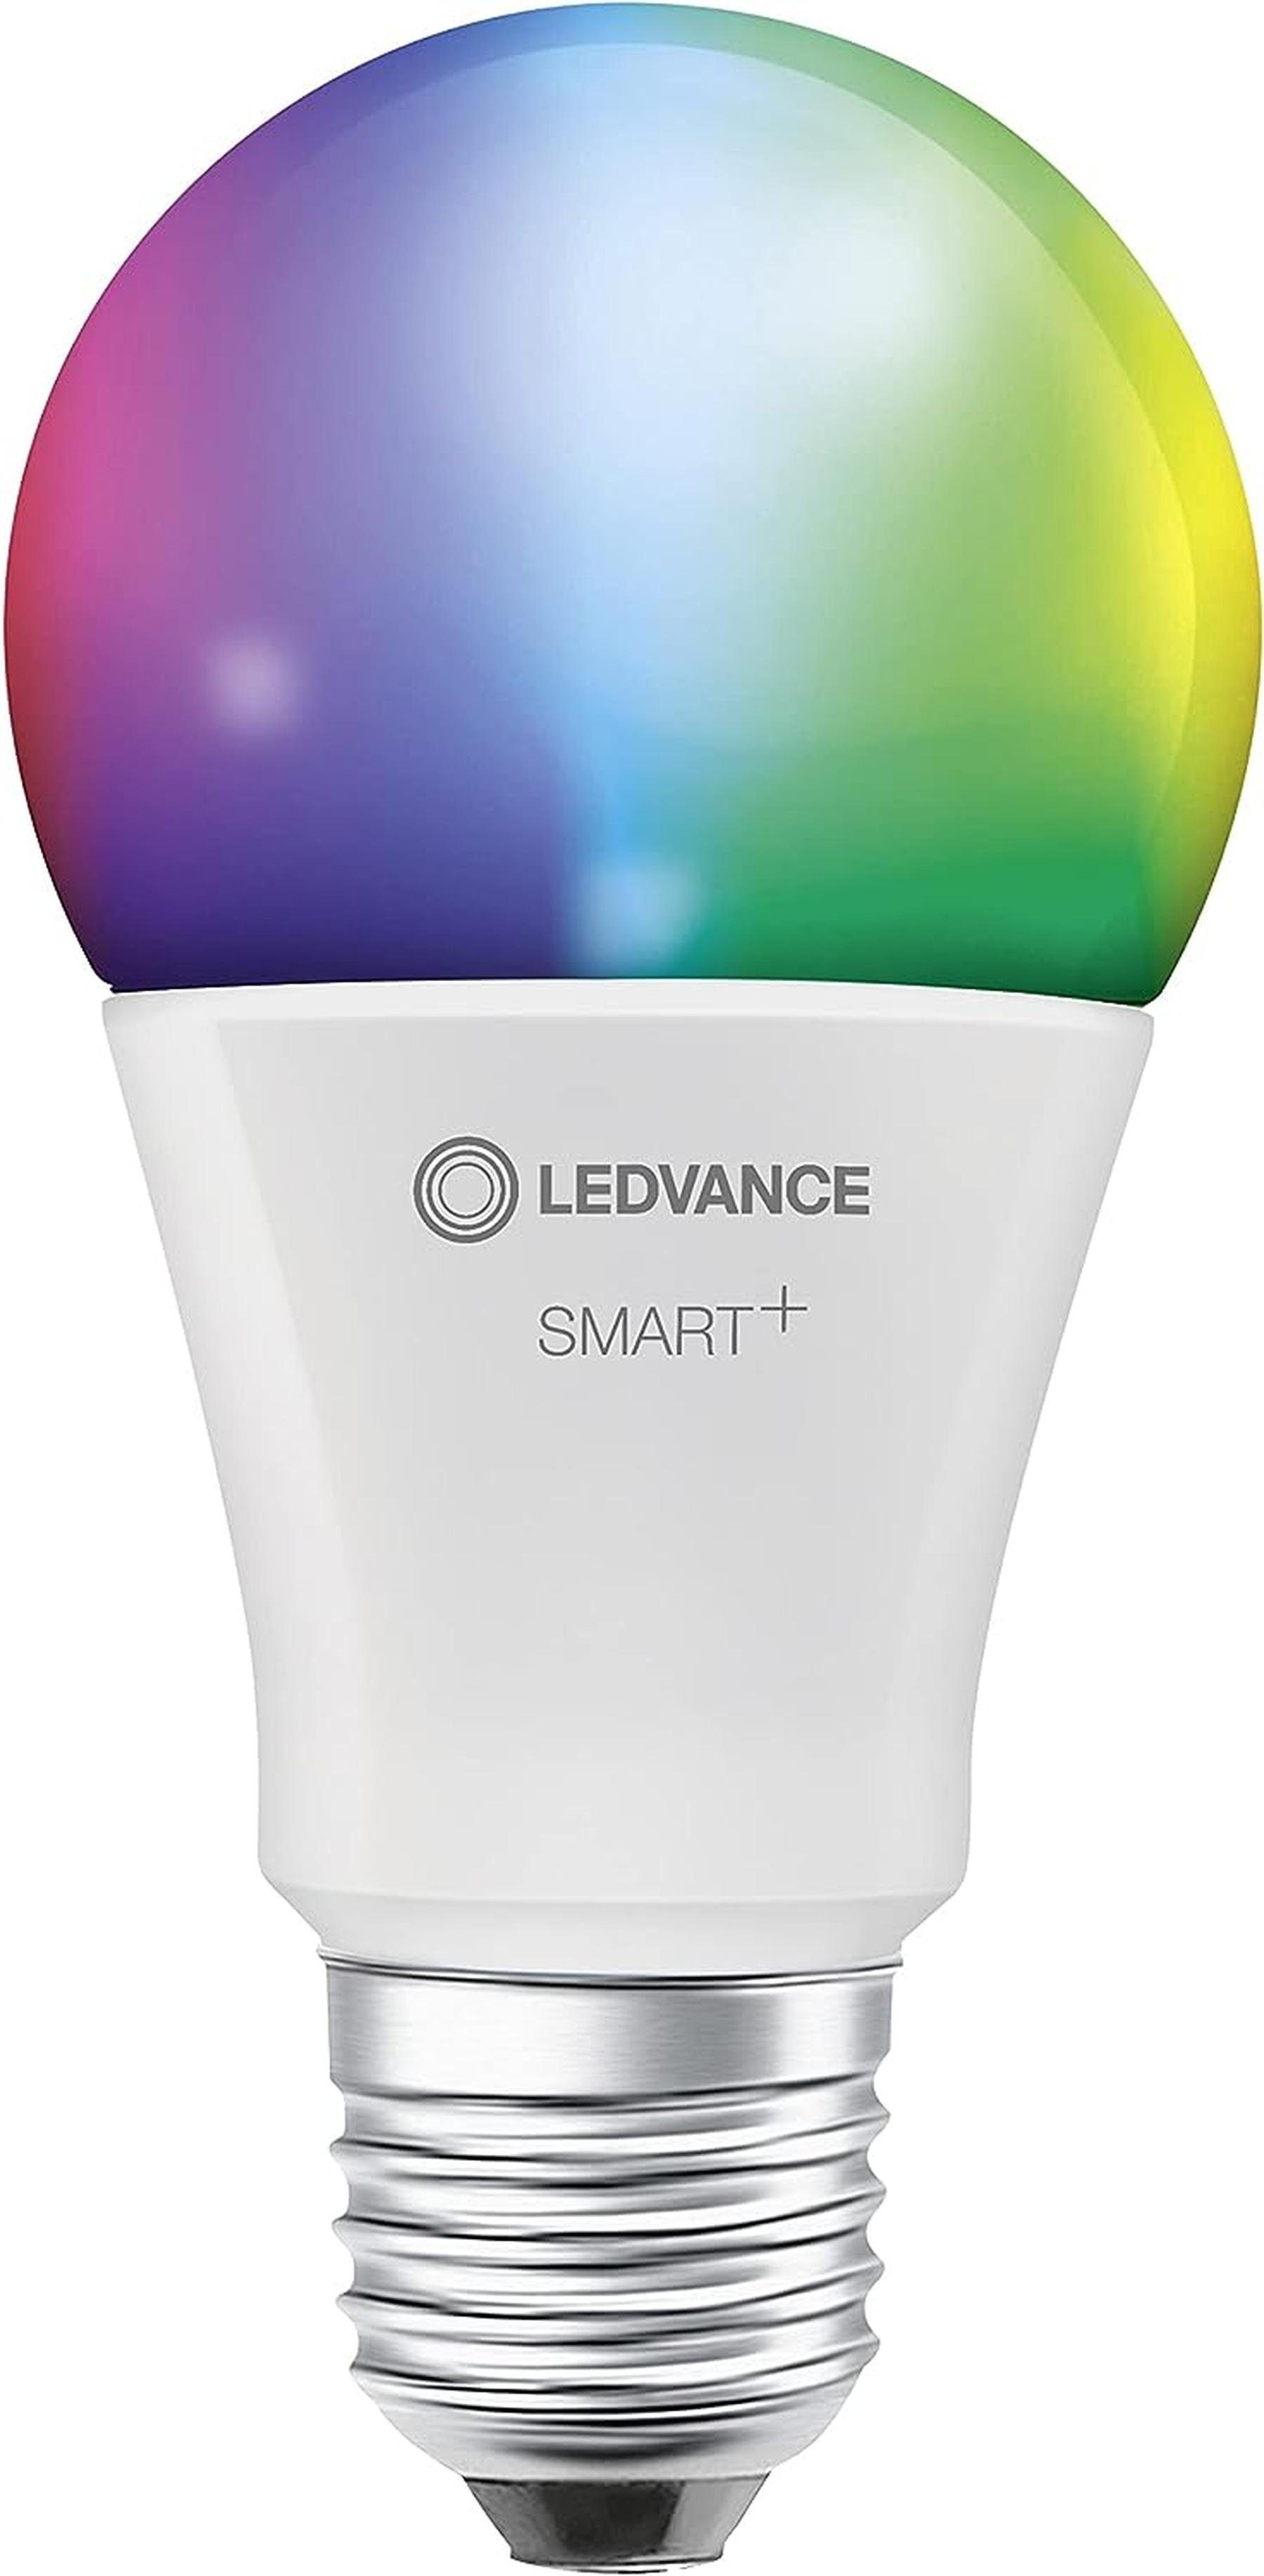 Ledvance LED-Leuchtmittel Ledvance LED Lampe E27 Kolbenform dimmbar RGB-TW  Glühbirne Smart Wifi, E27, RGB, Dimmbar, Farbwechsel, Mattiert, RGB, 3er